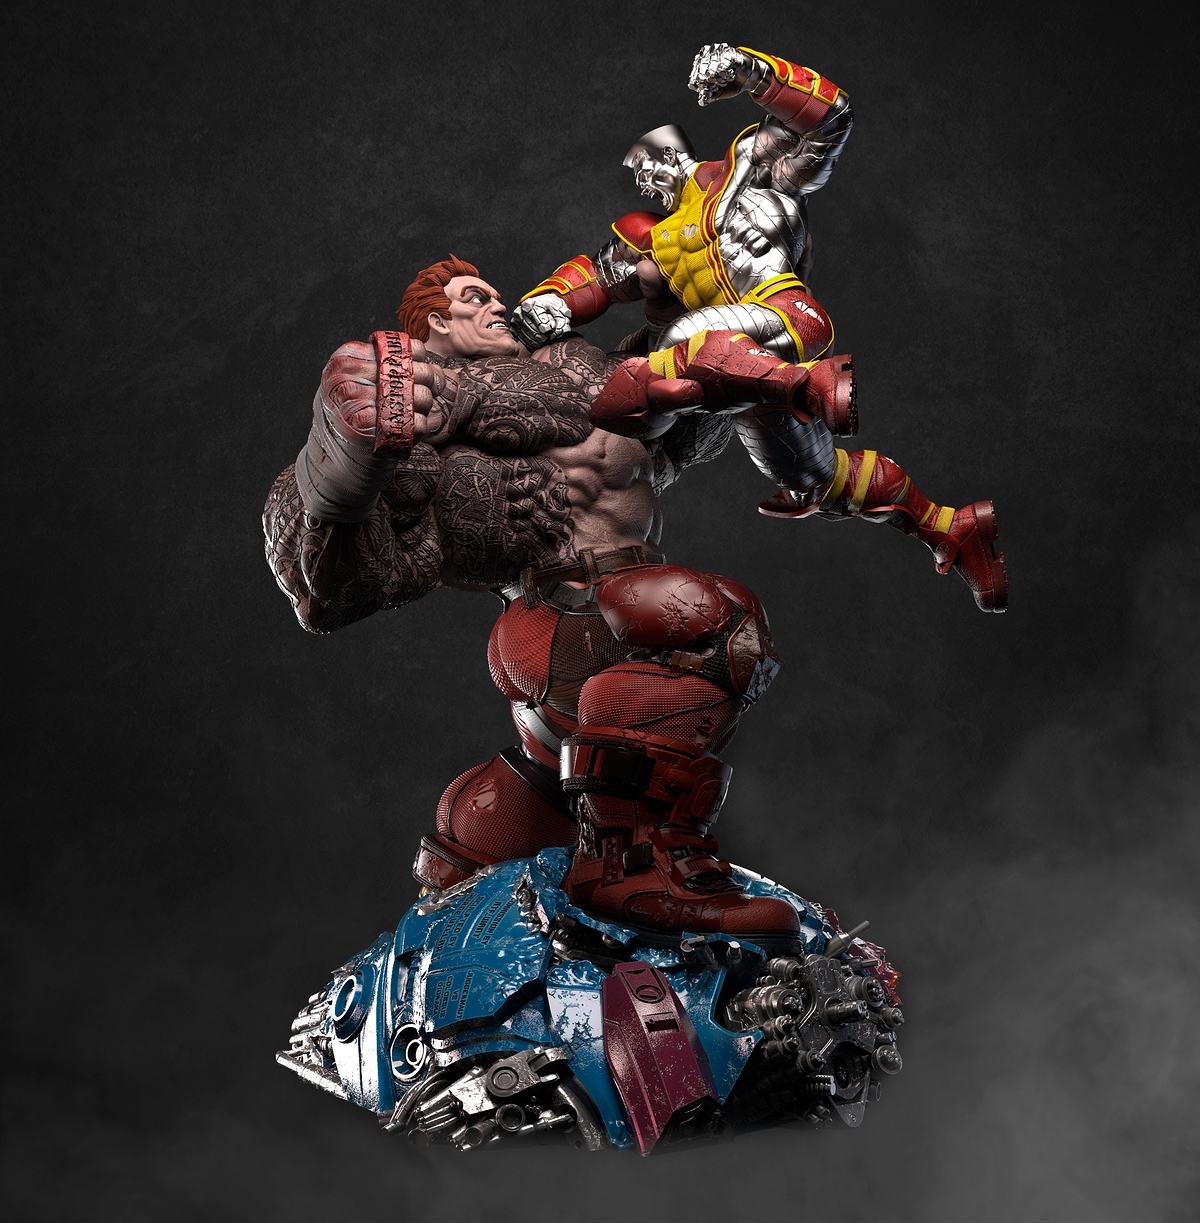 juggernaut vs colossus - image17